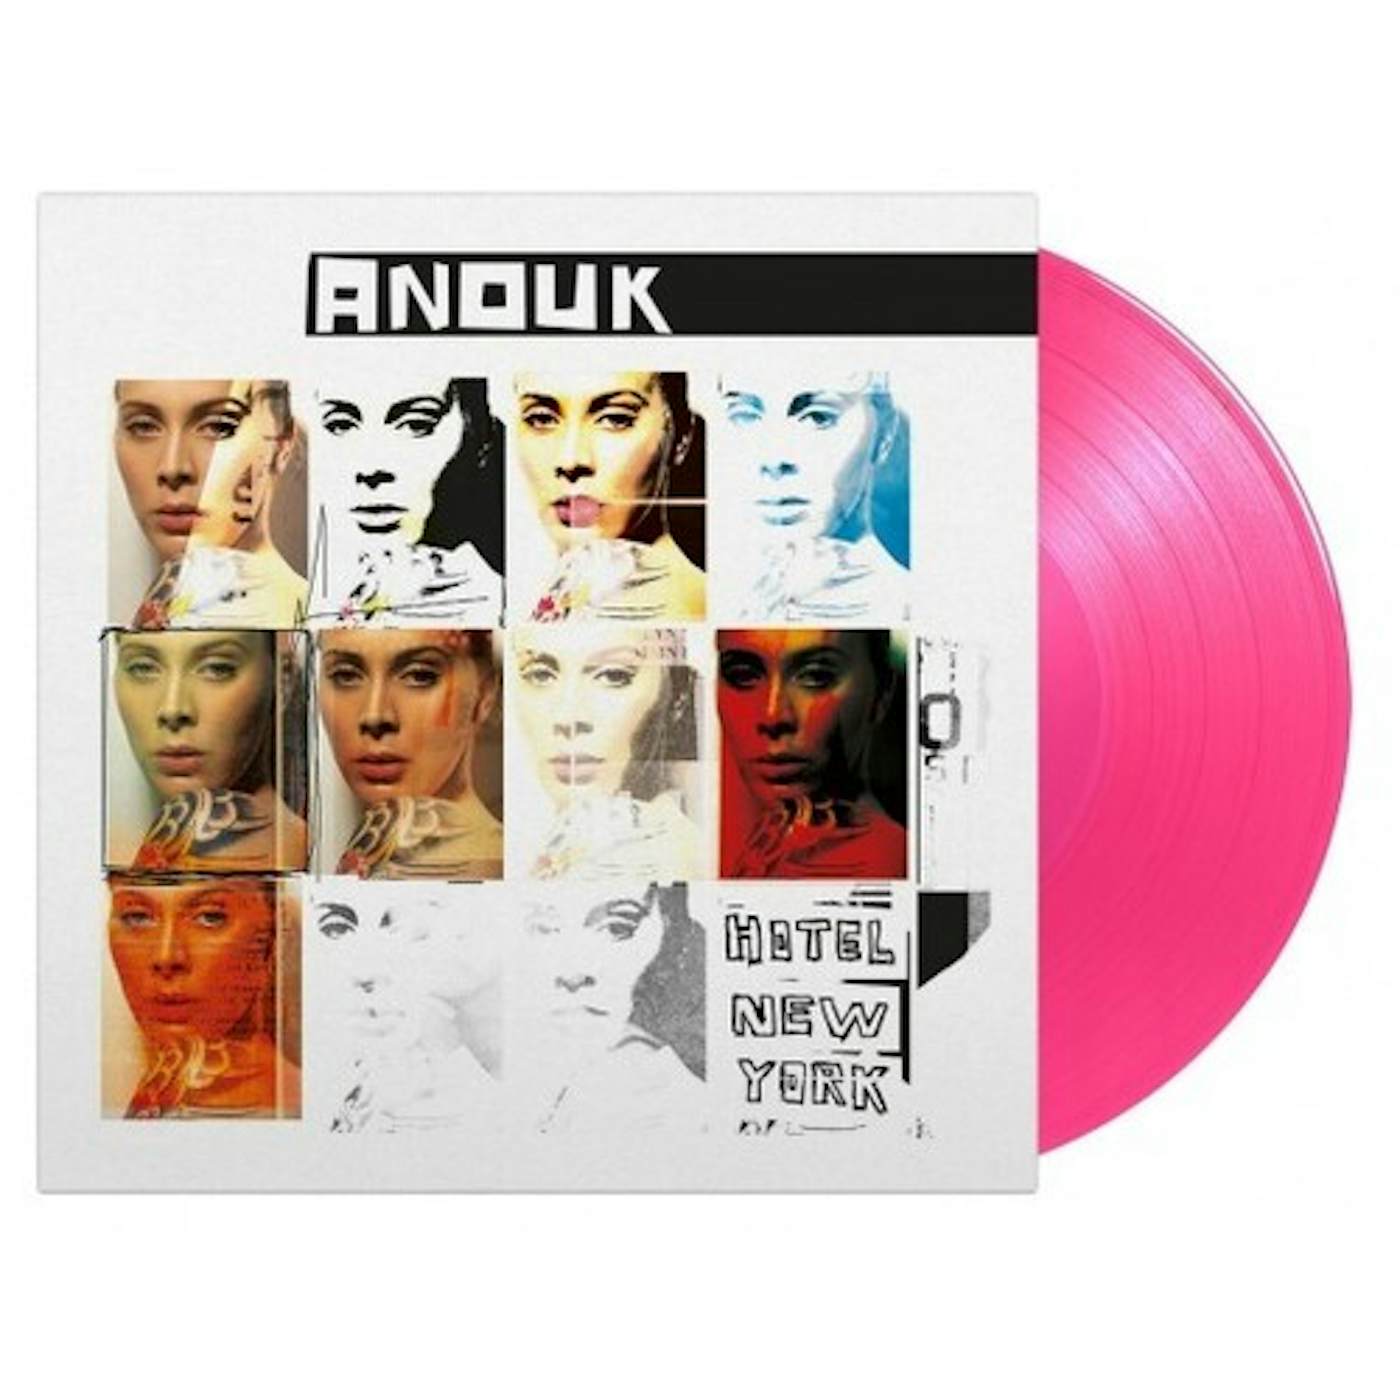 Anouk Hotel New York Vinyl Record